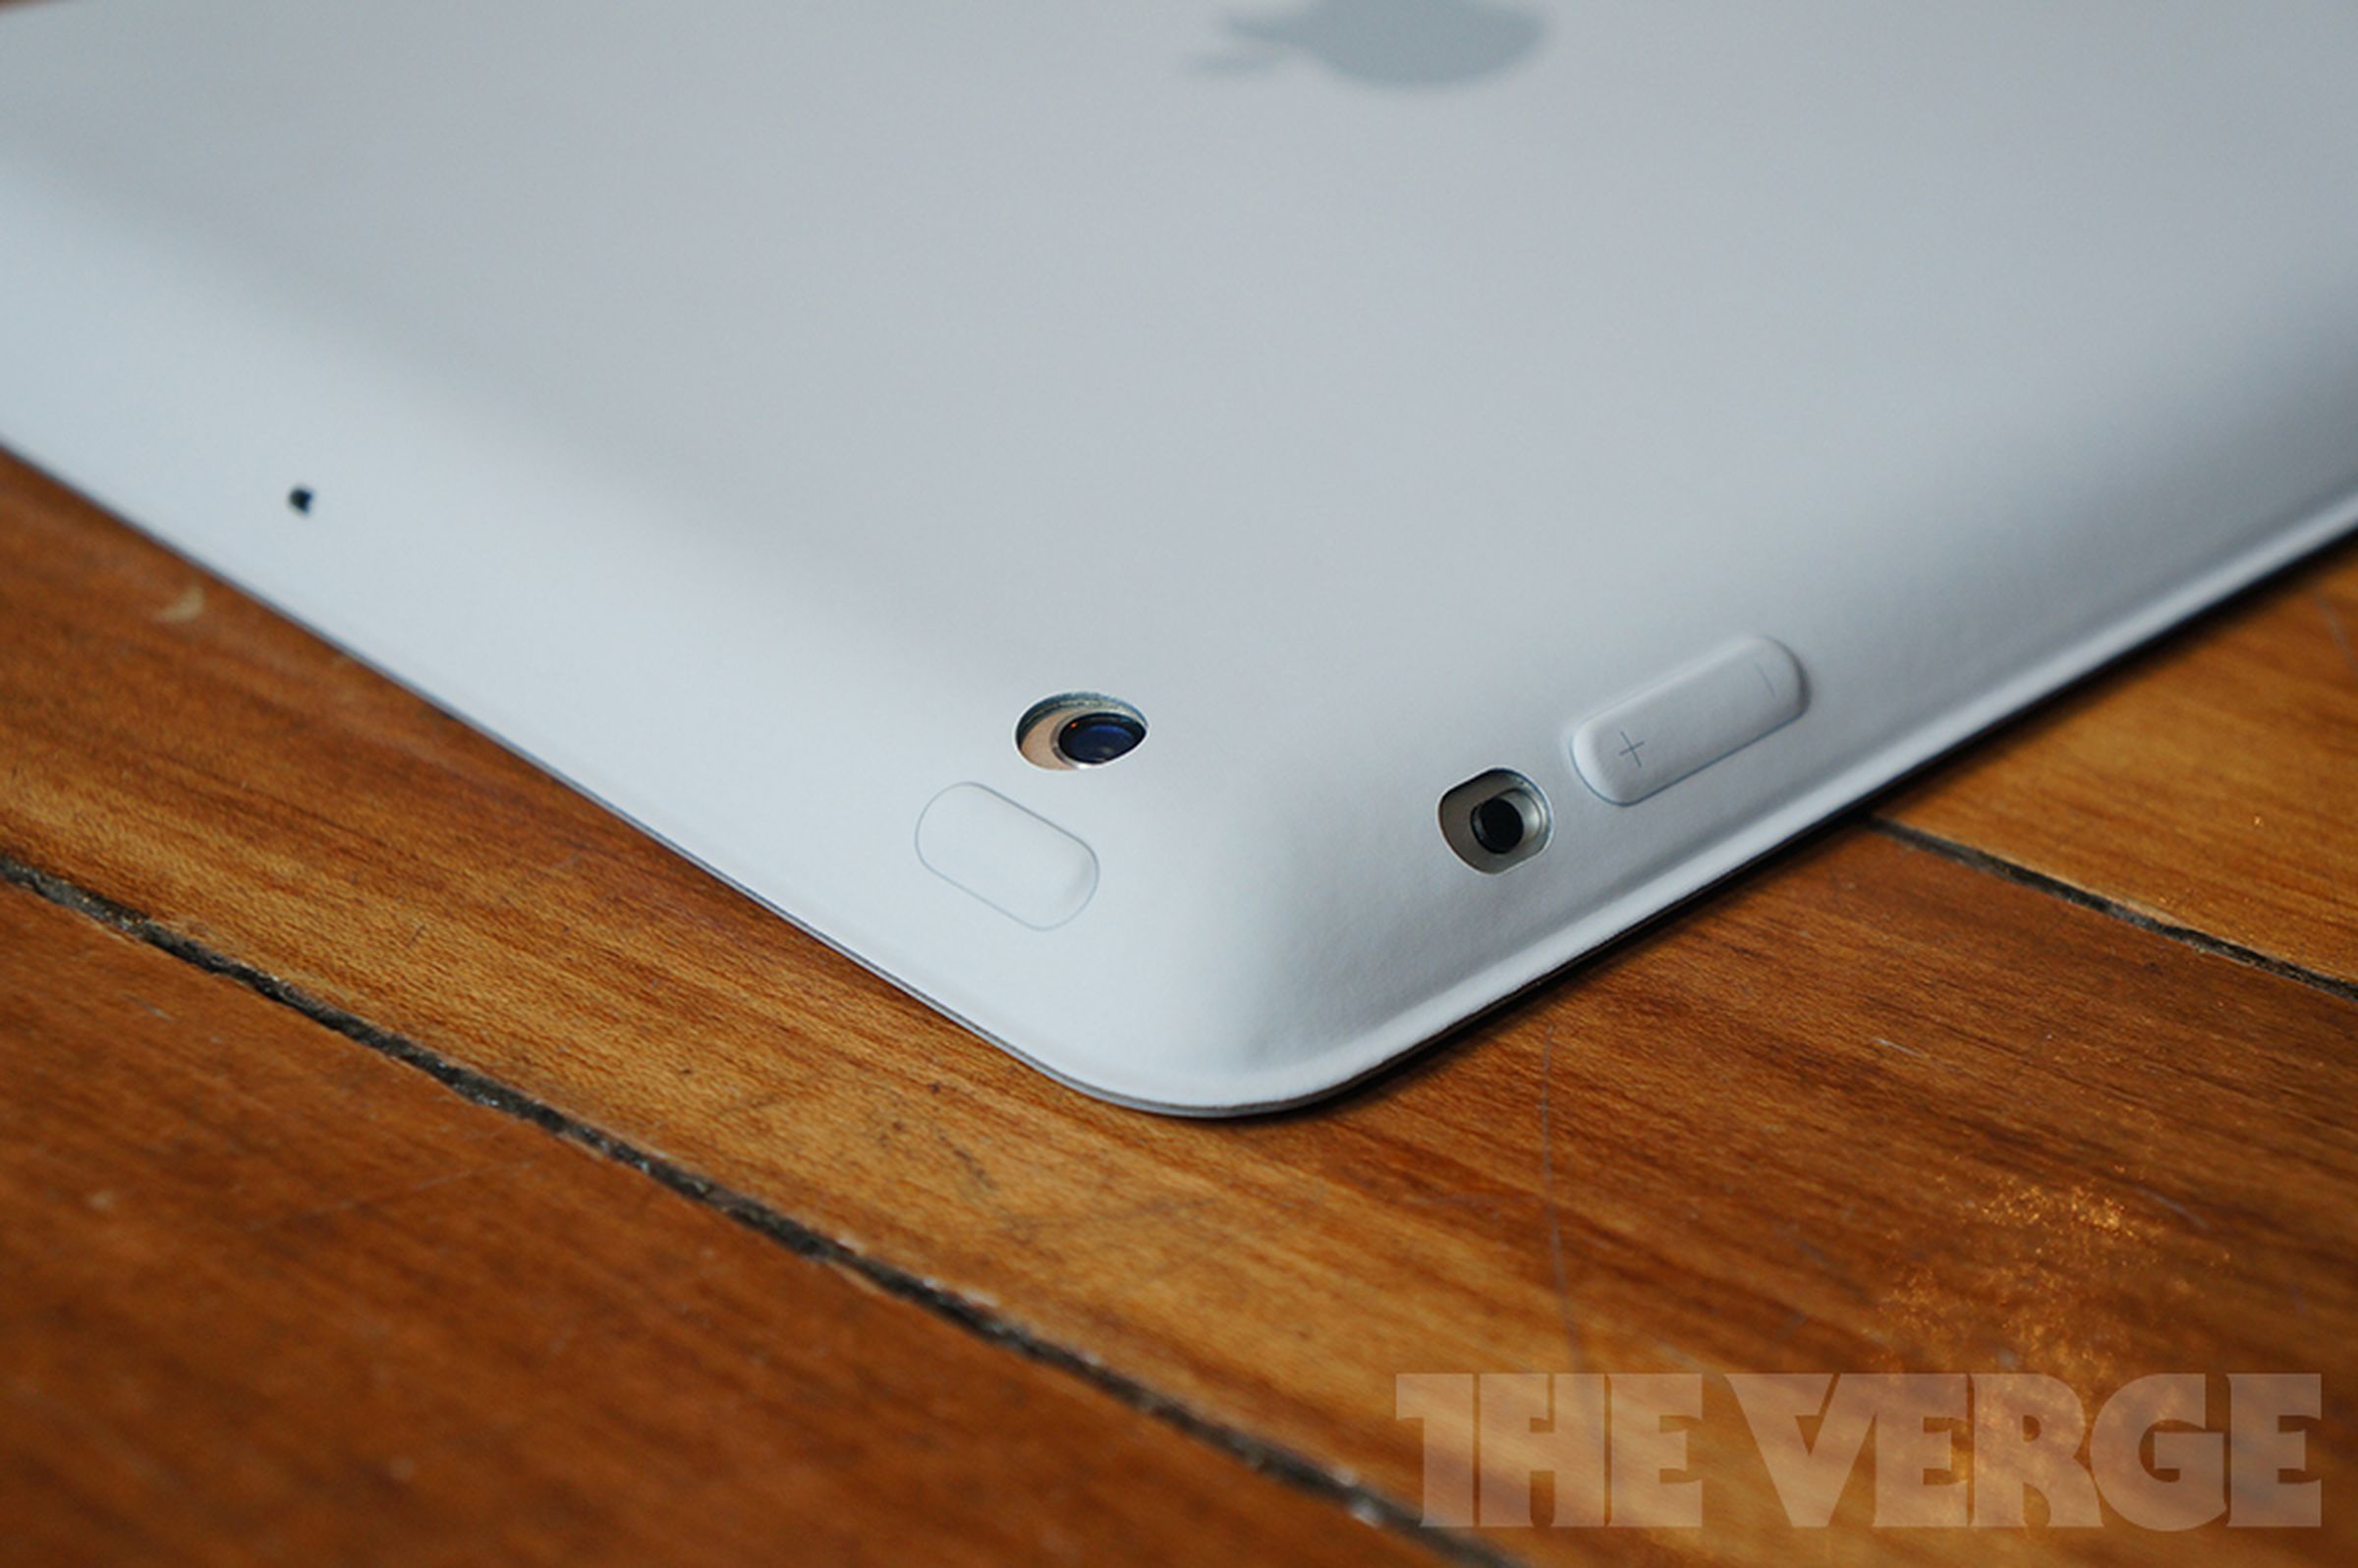 iPad Smart Case hands-on photos